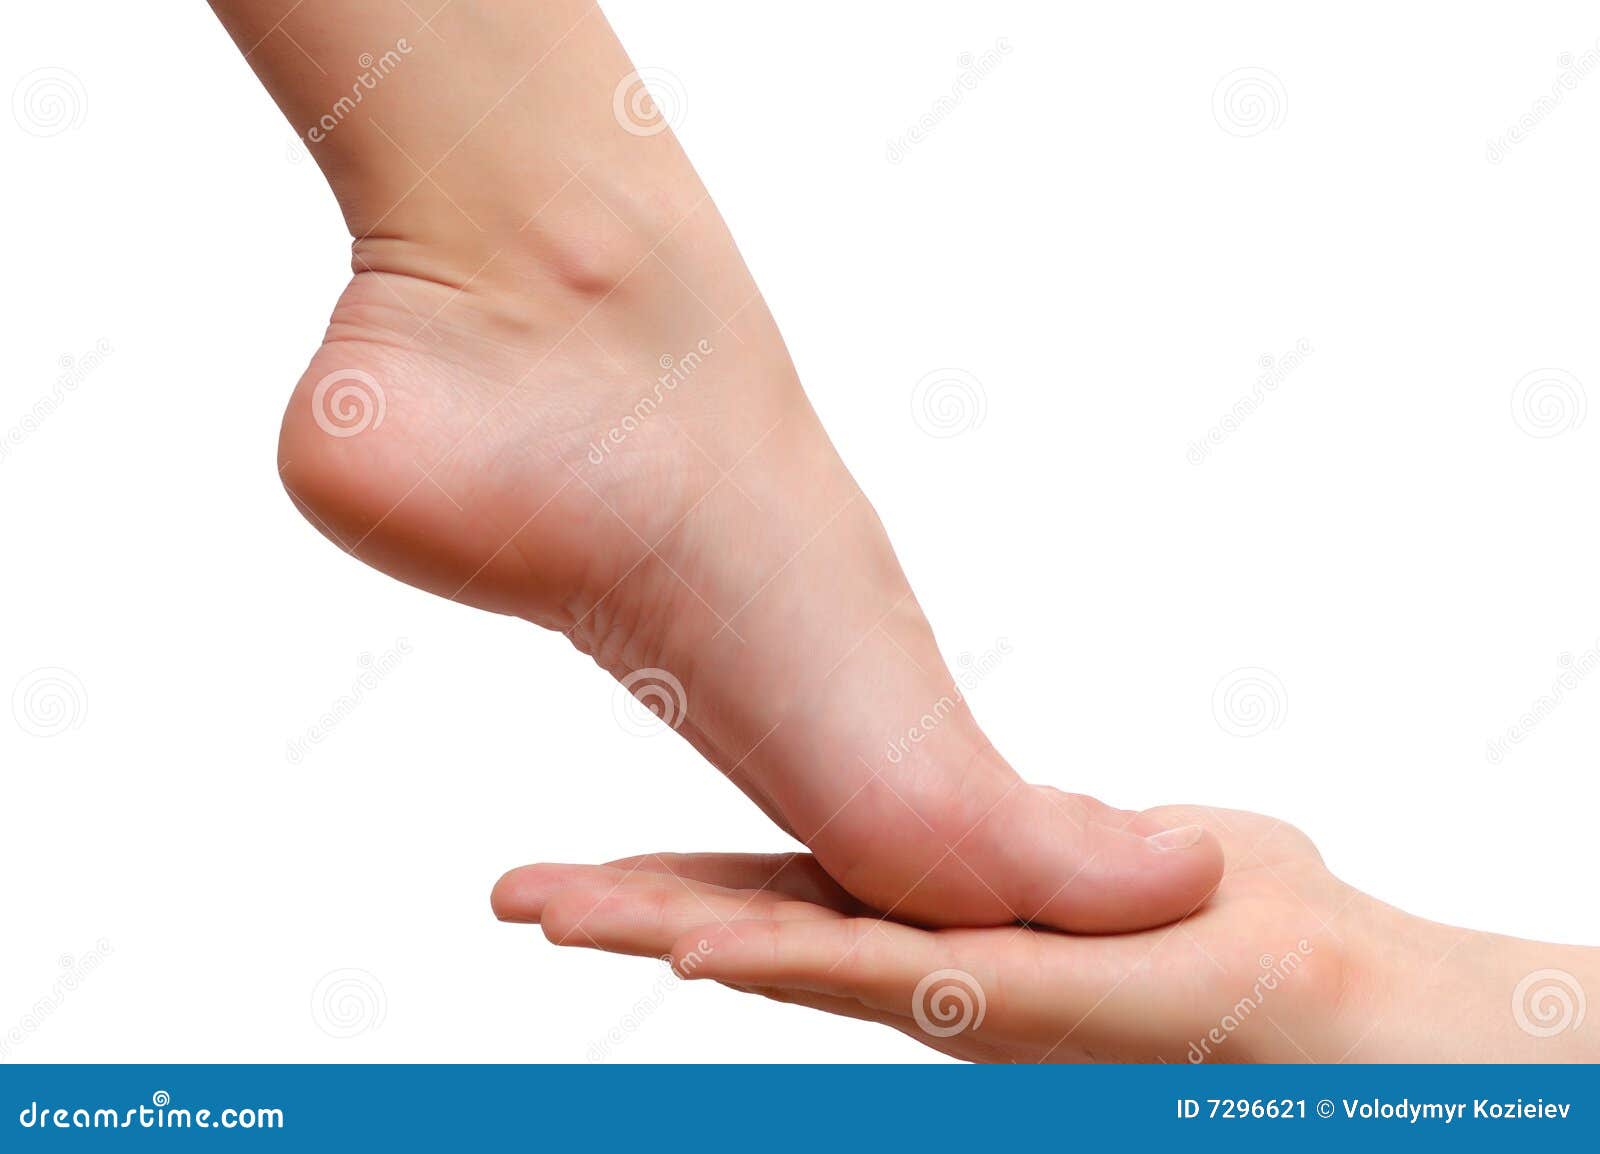 man s hand woman s feet 7296621